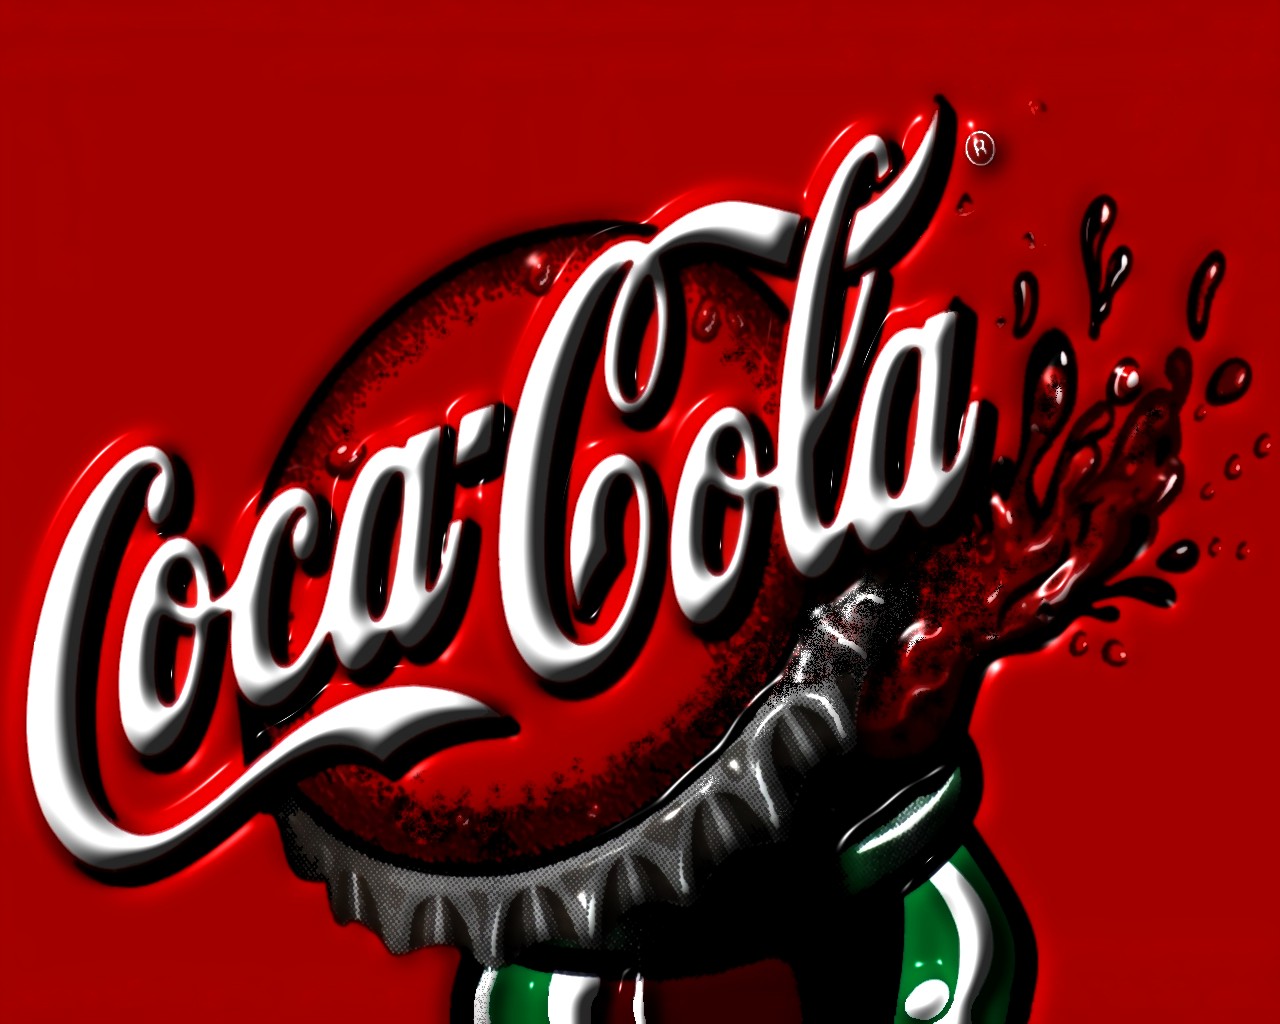 Coca'Cola 2